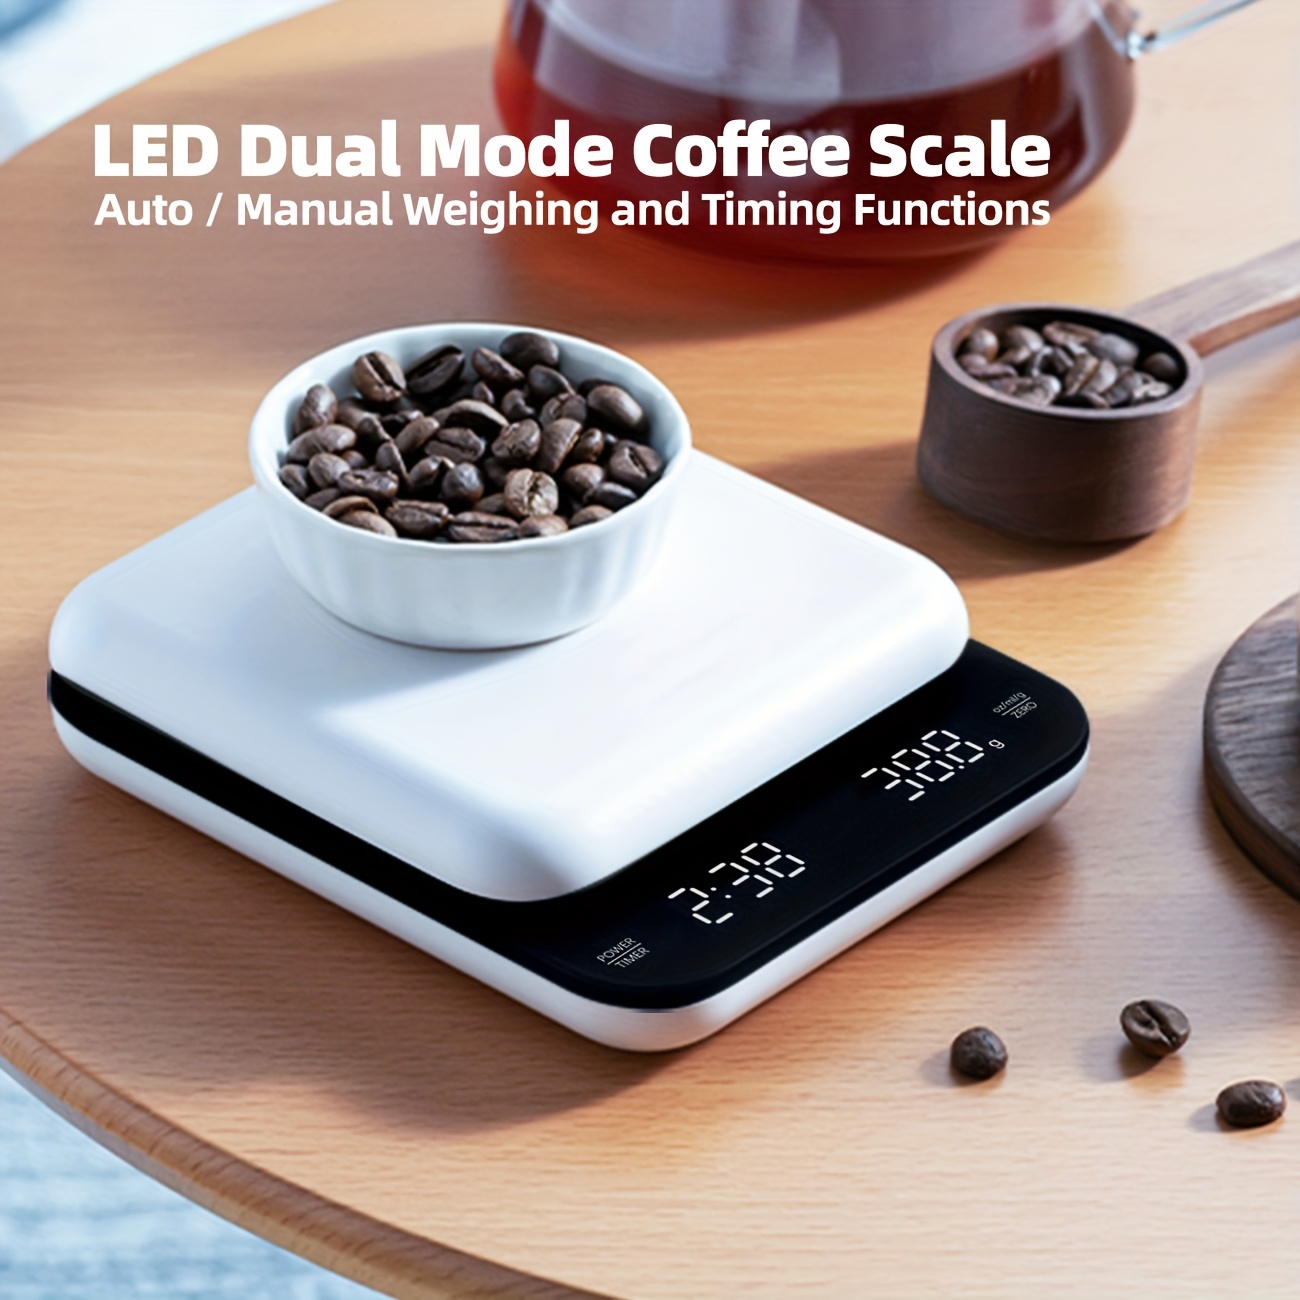 MHW-3BOMBER Smart Drip Espresso Coffee Scale with Auto Timer